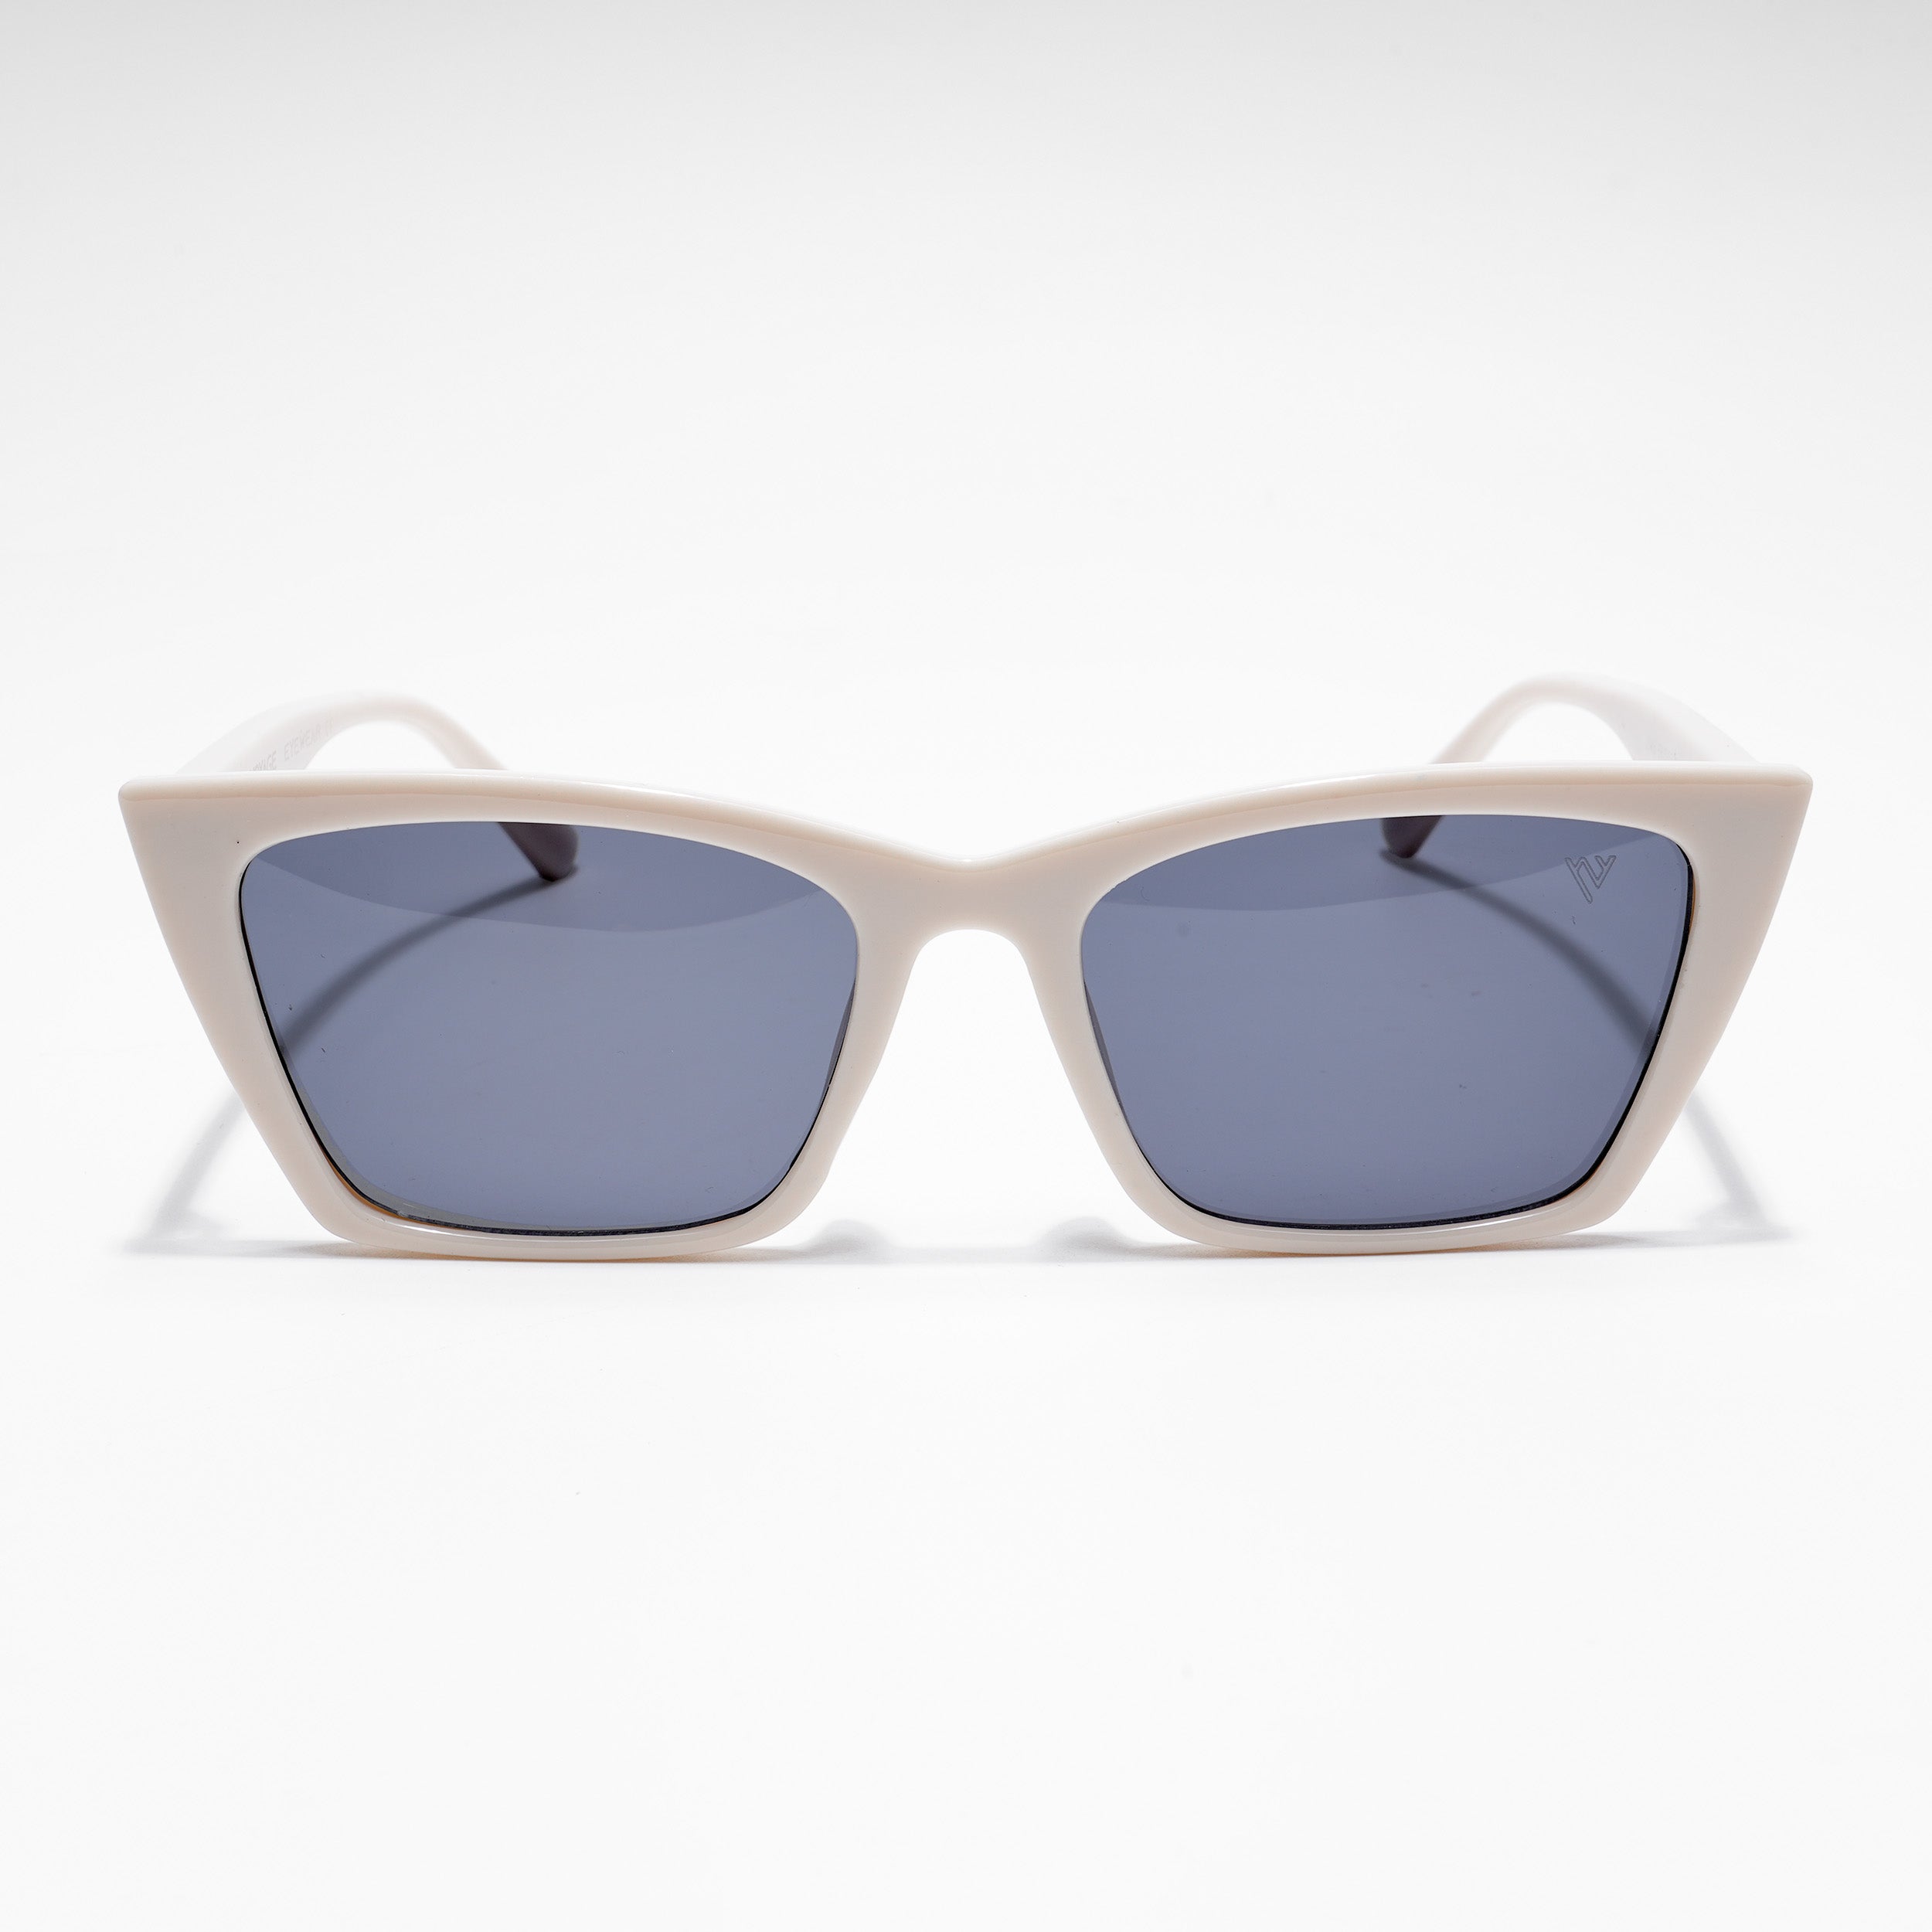 Voyage Black Cateye Sunglasses for Women - MG3991